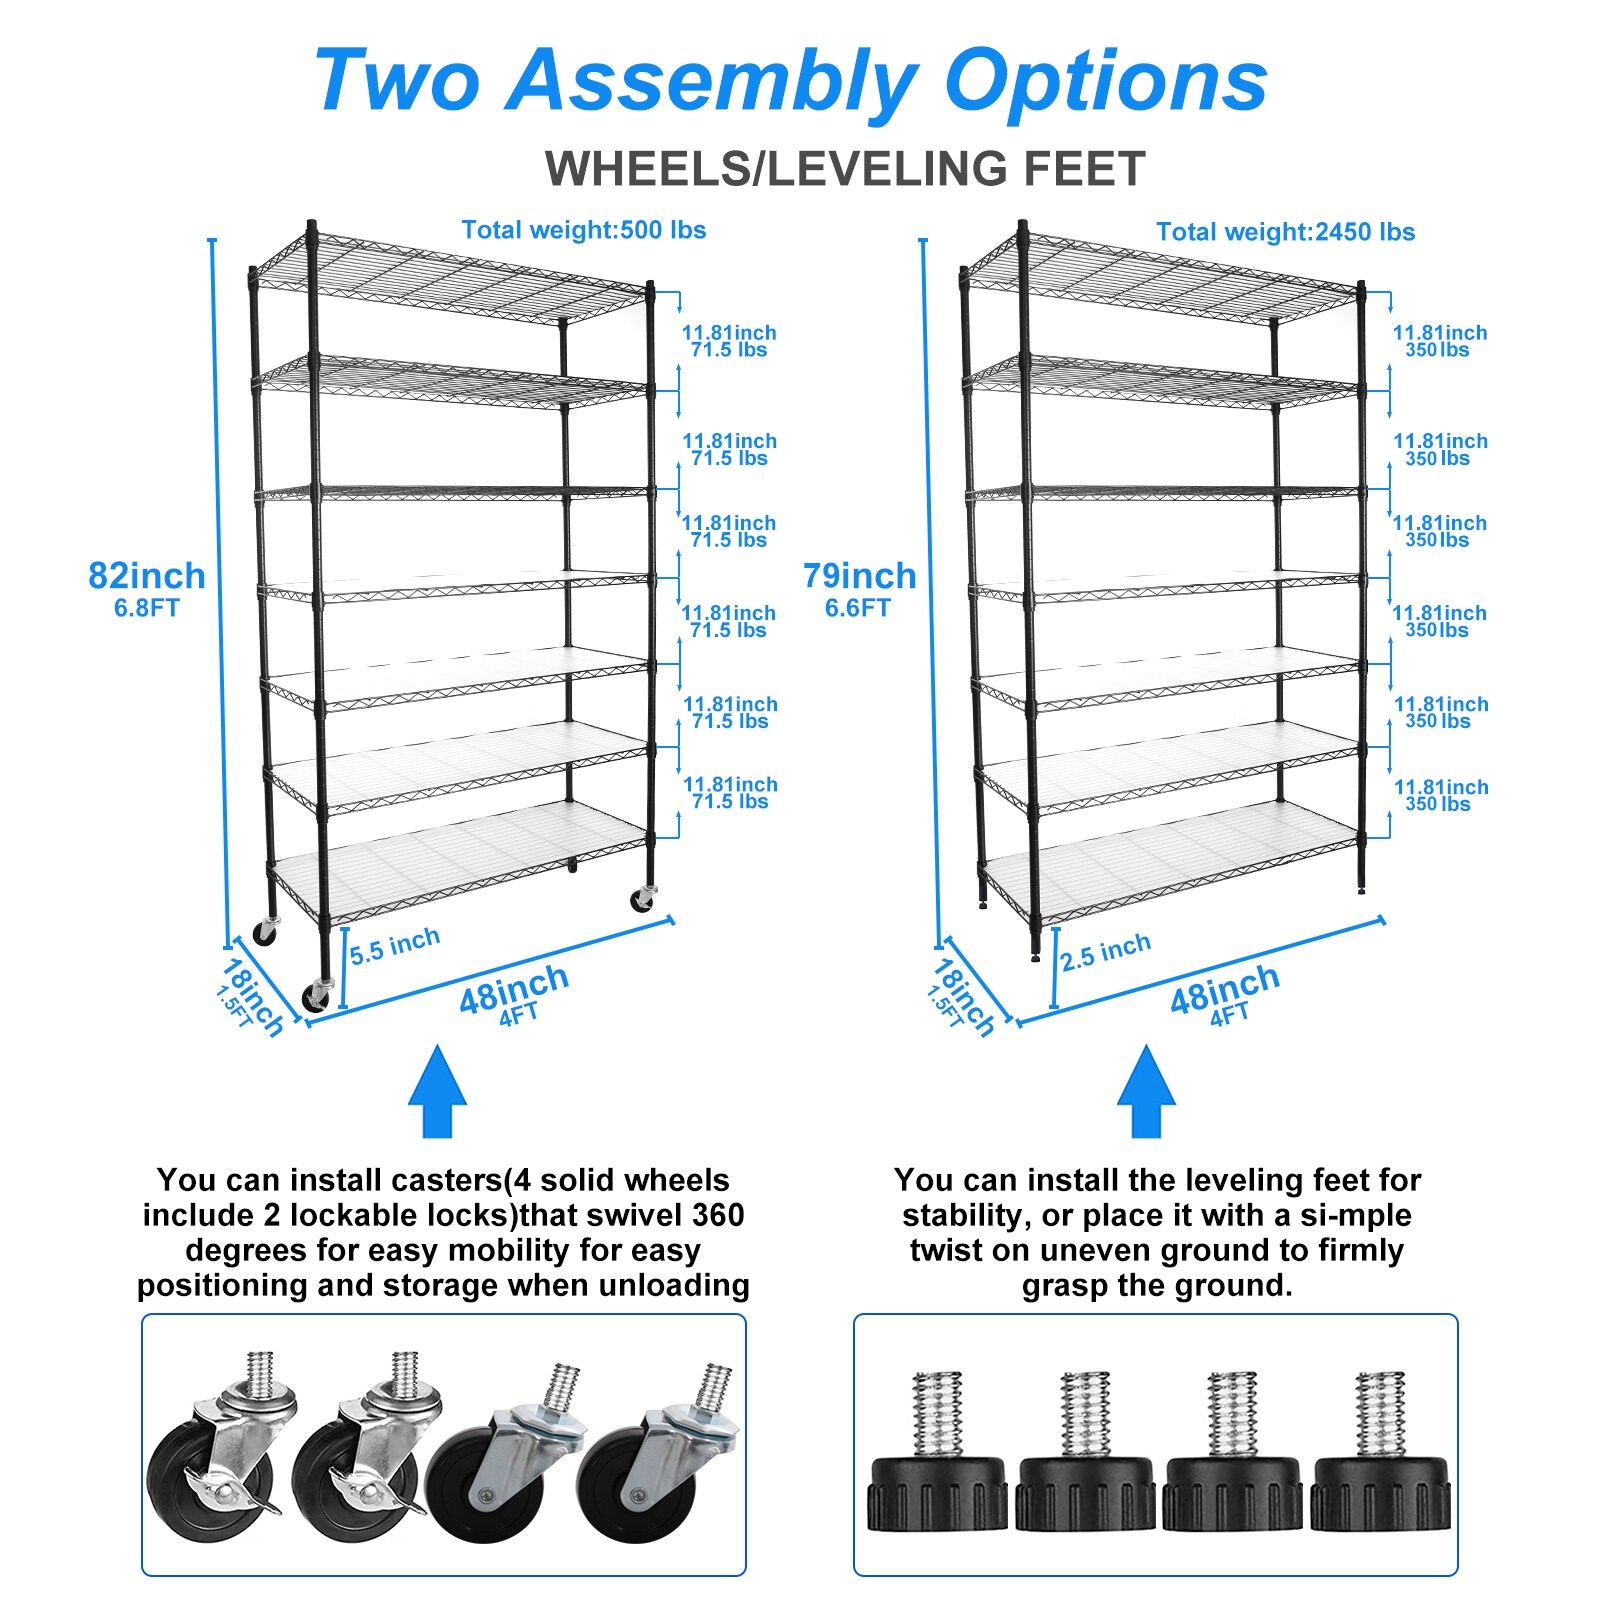 7 Tier Wire Shelving Unit Adjustable Metal Garage Storage Shelves with  Wheels - On Sale - Bed Bath & Beyond - 37051318